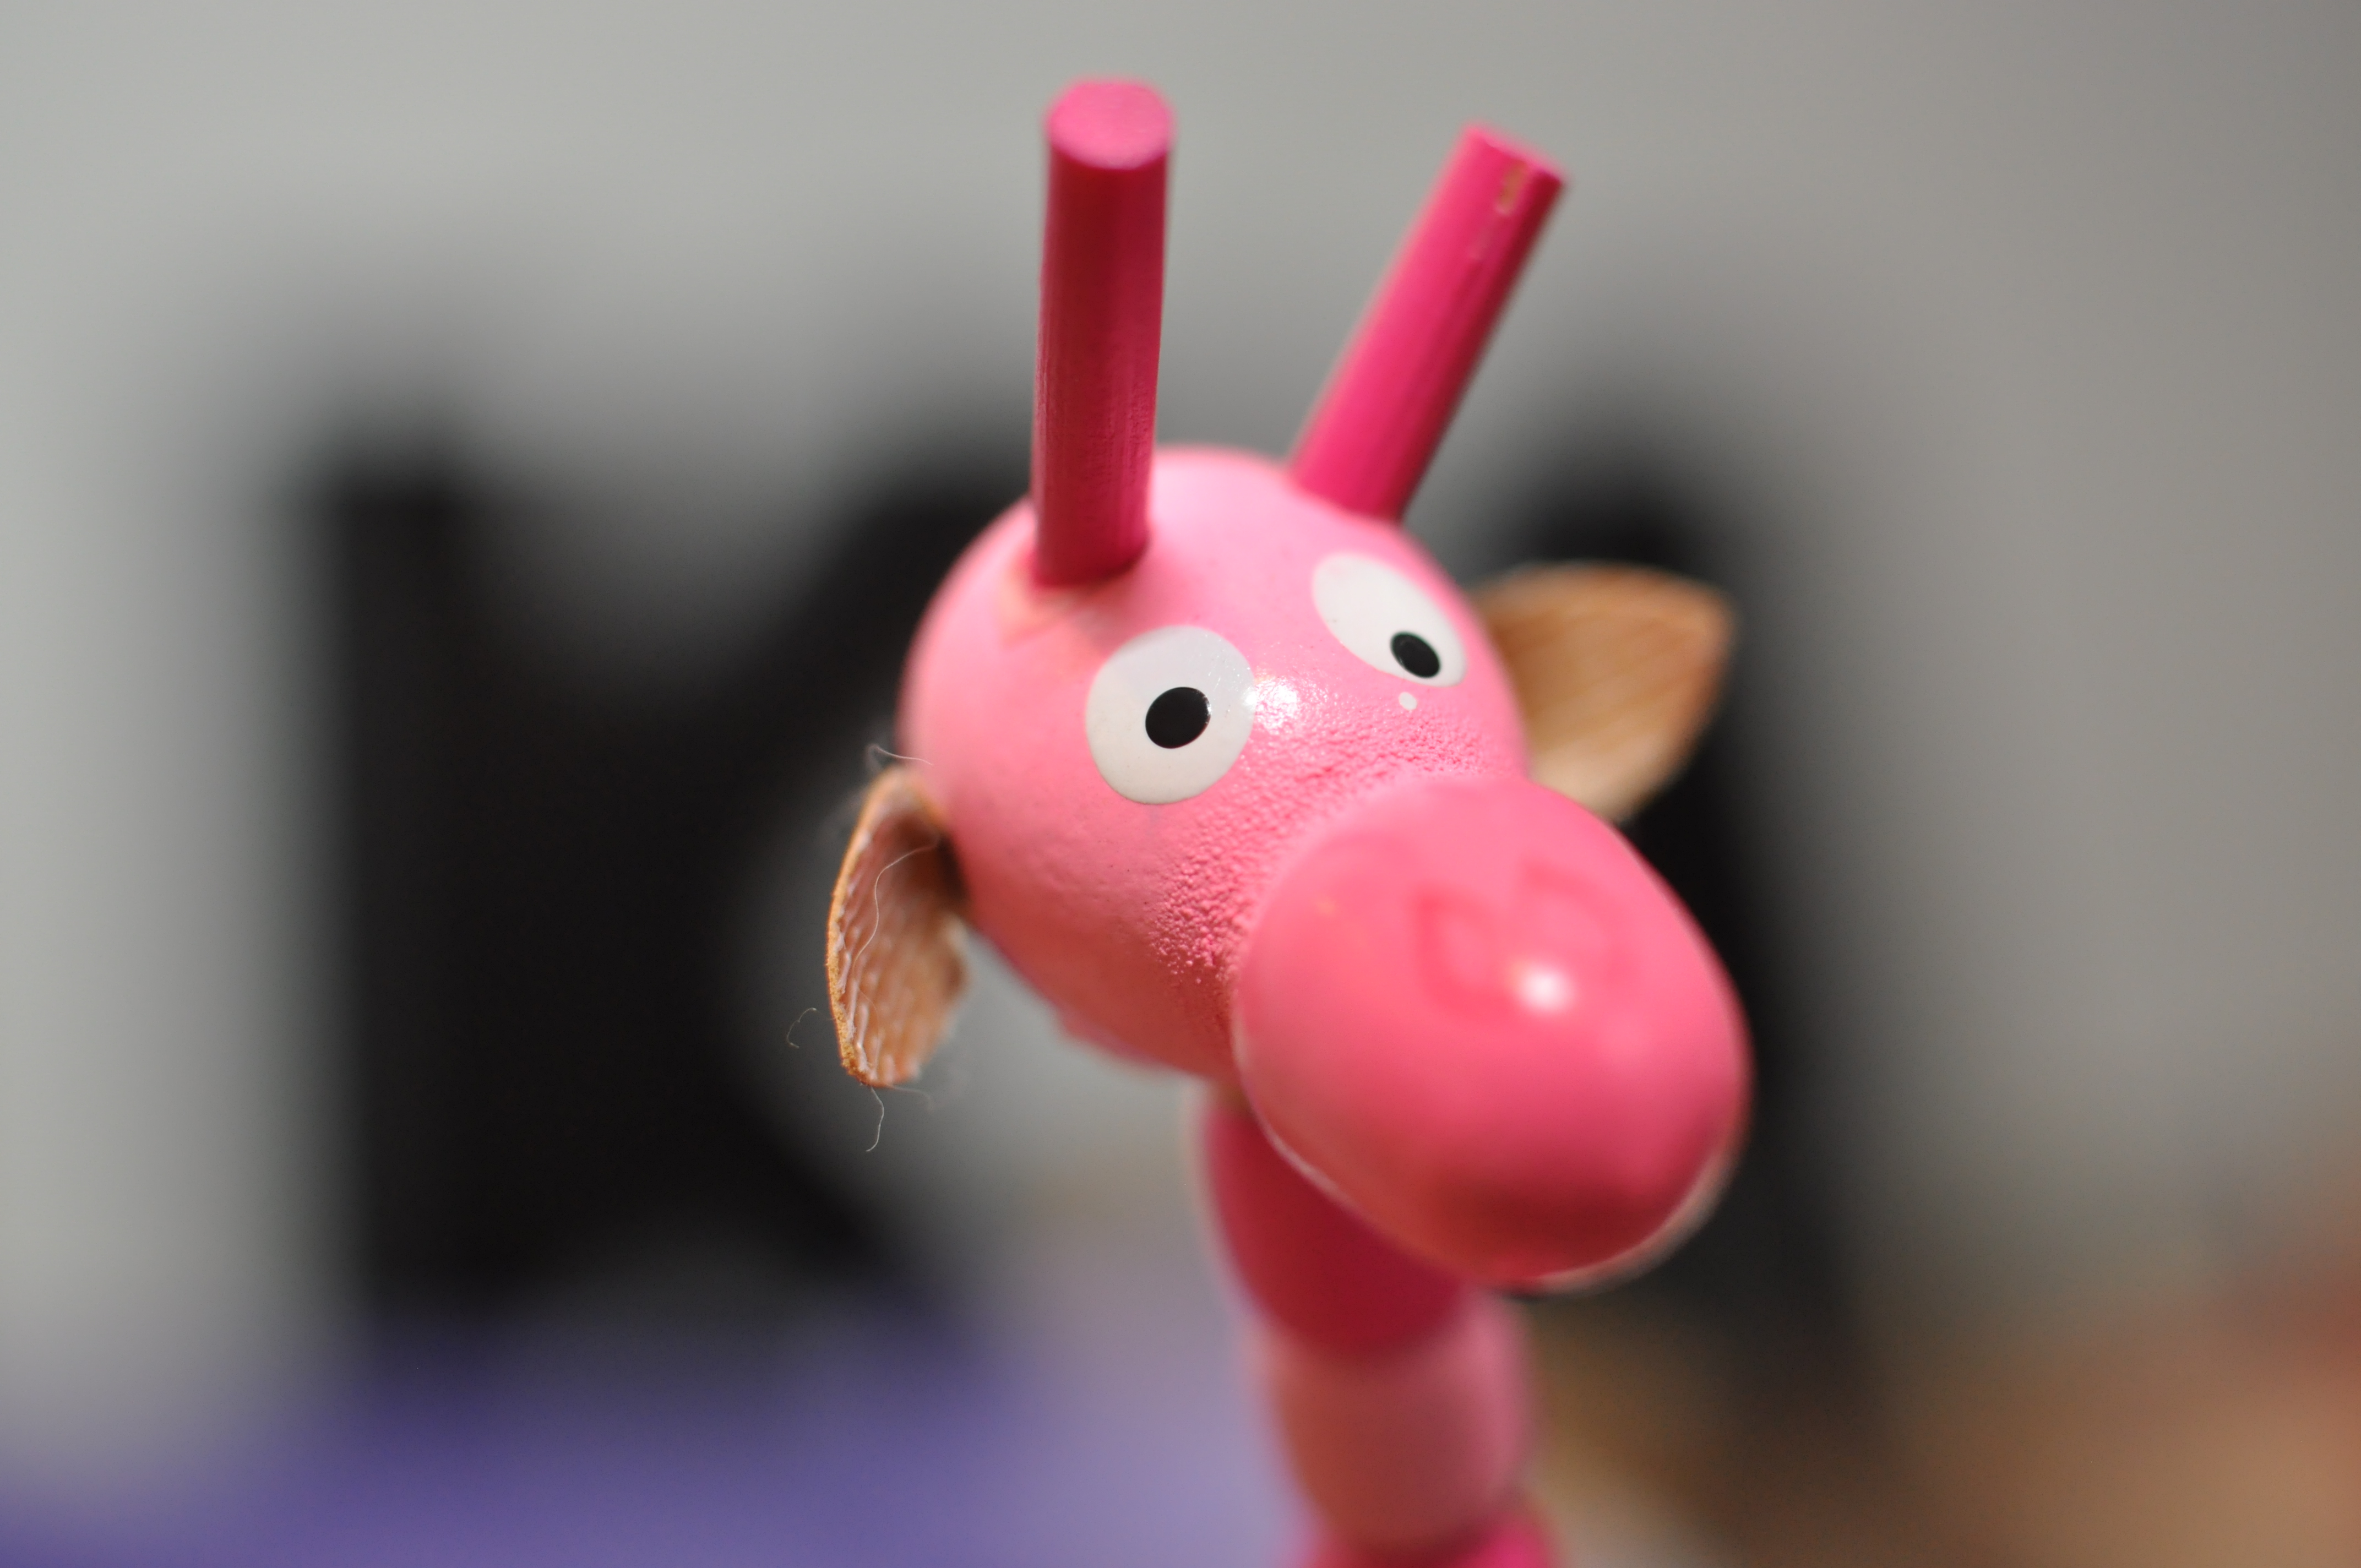 Pink giraffe photo